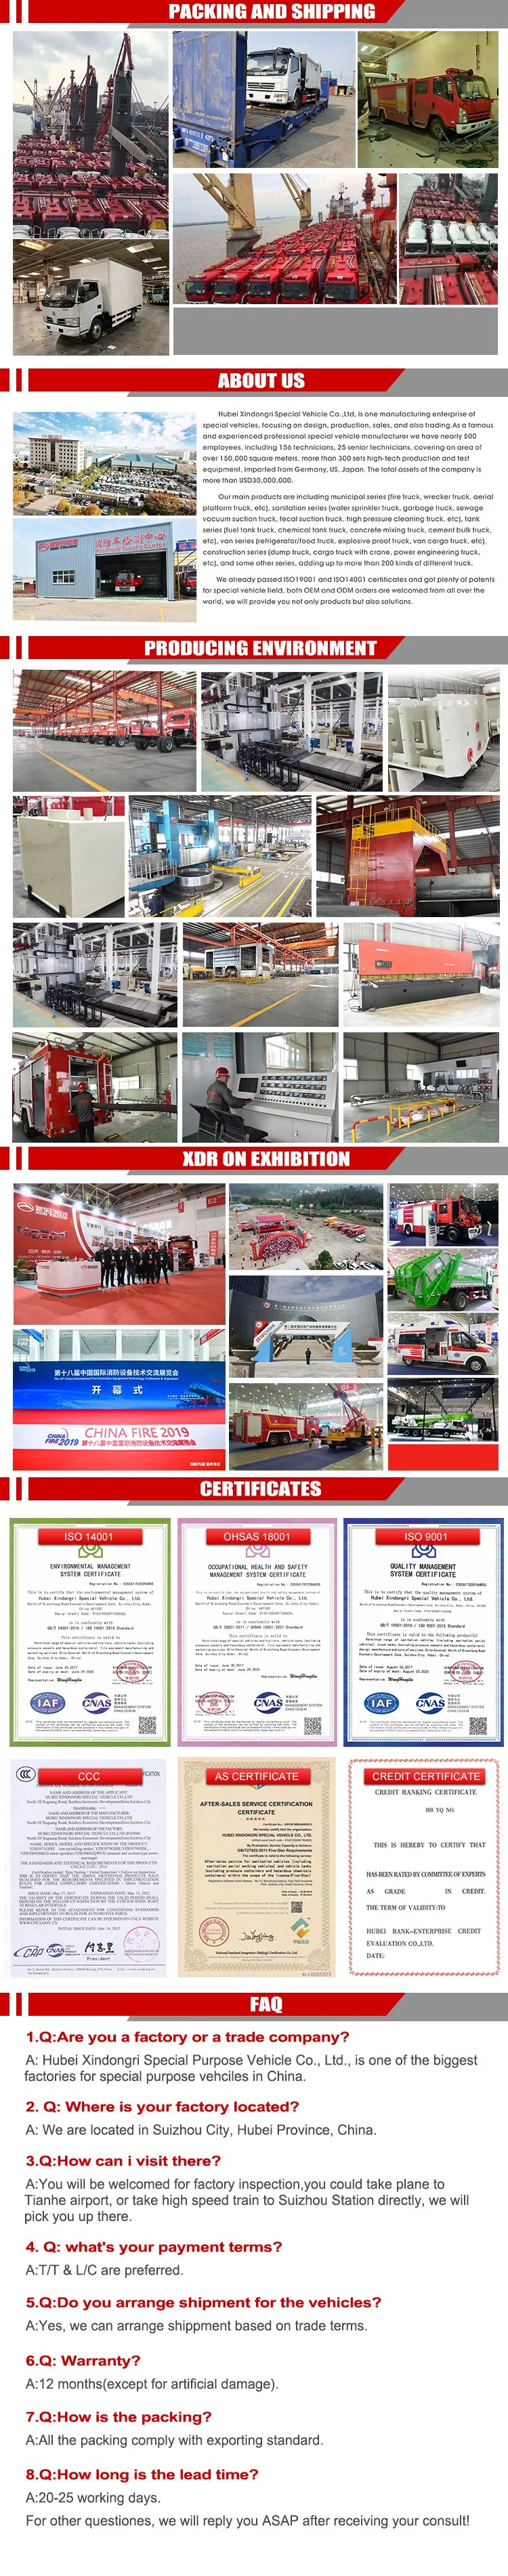 Sinotruk/HOWO Fire Engine, Fire Fighting Vehicles, Fire Engine